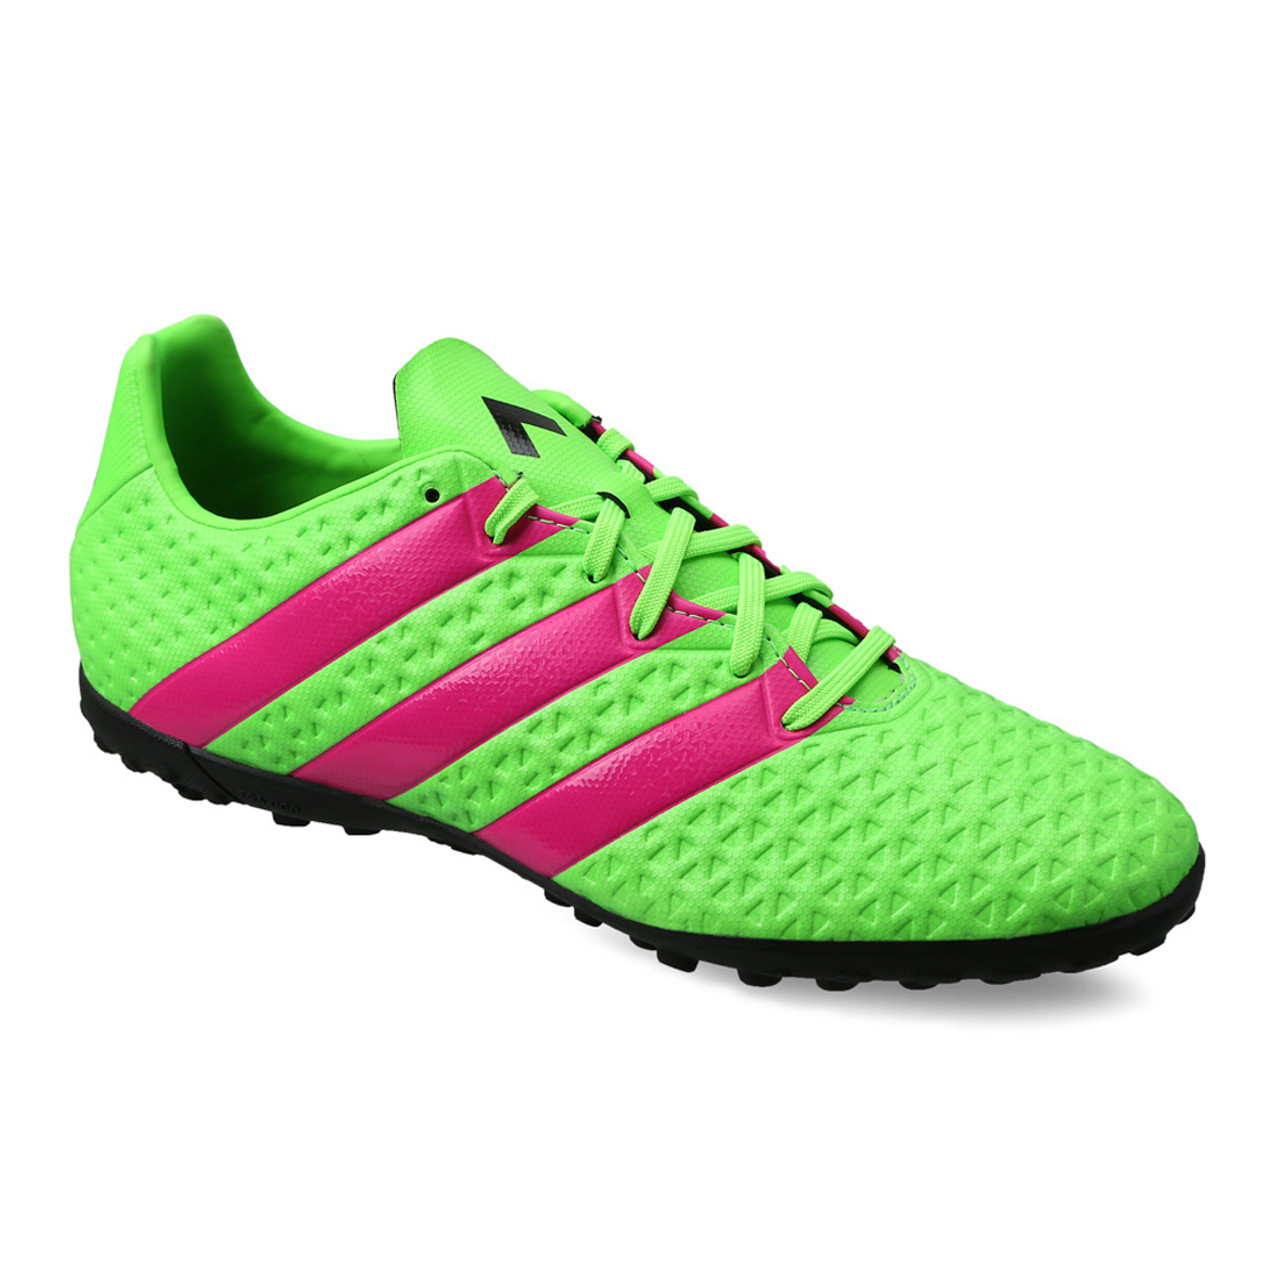 Adidas Men's Ace 16.4 TF Soccer Shoe - Green | Discount Adidas Men's Athletic Shoes More - | Shoolu.com